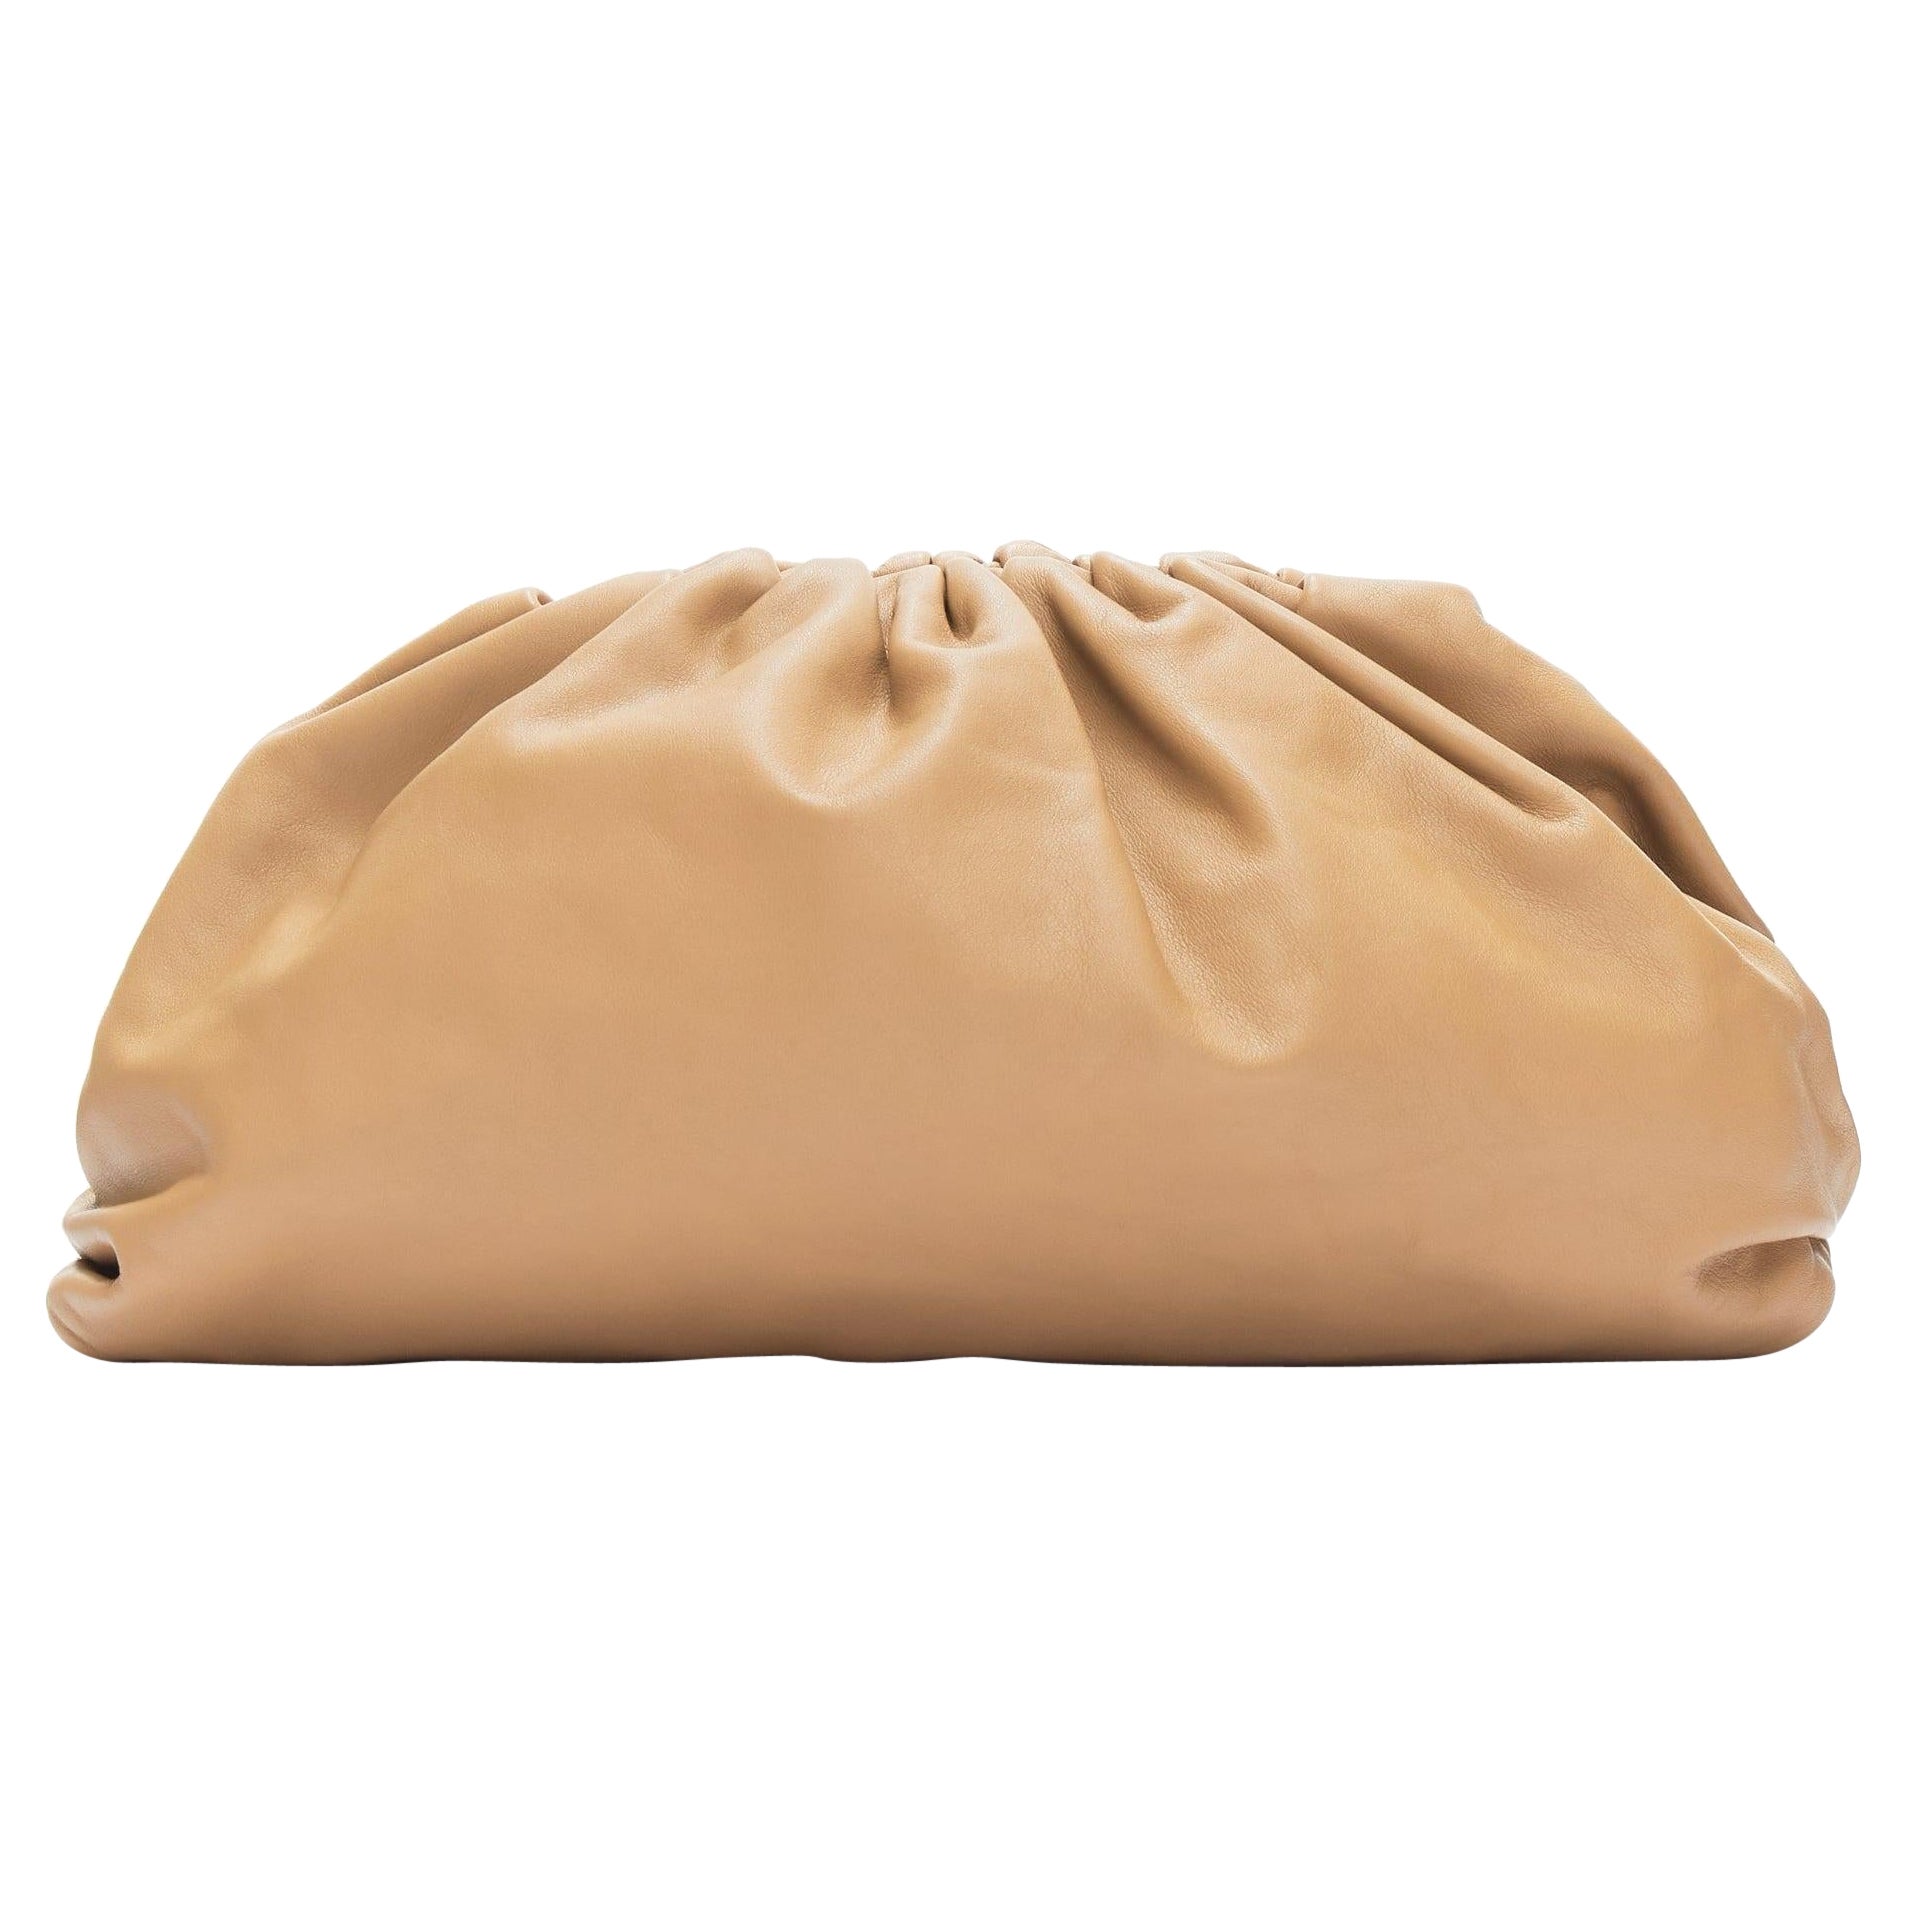 BOTTEGA VENETA The Pouch tan leather dumpling clutch bag For Sale